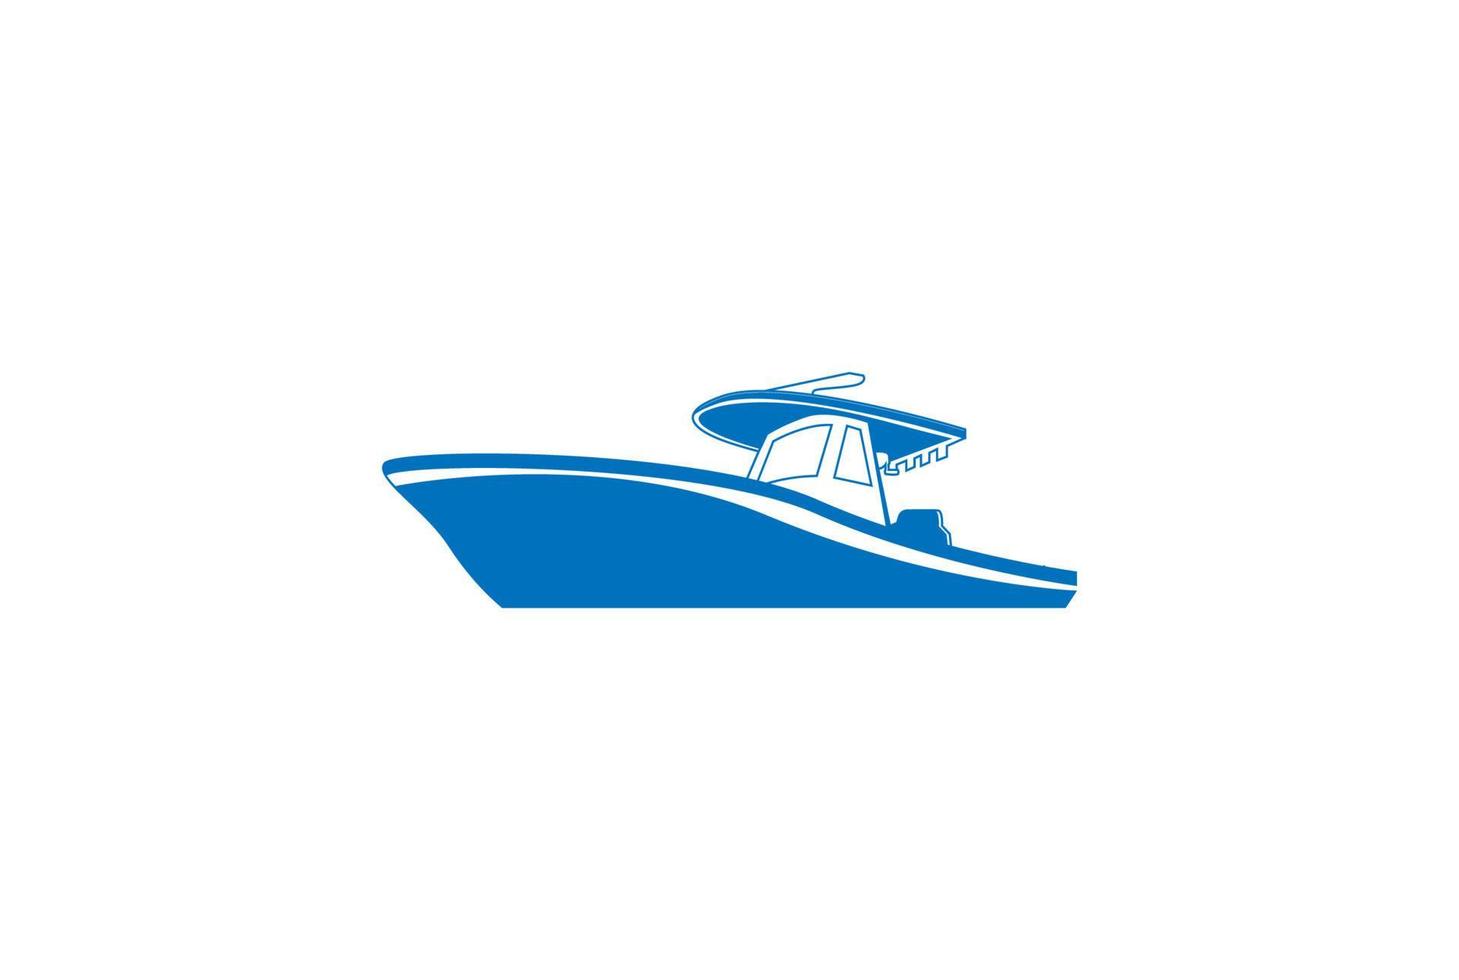 moderno blu barca di lusso nave yacht logo design vettore